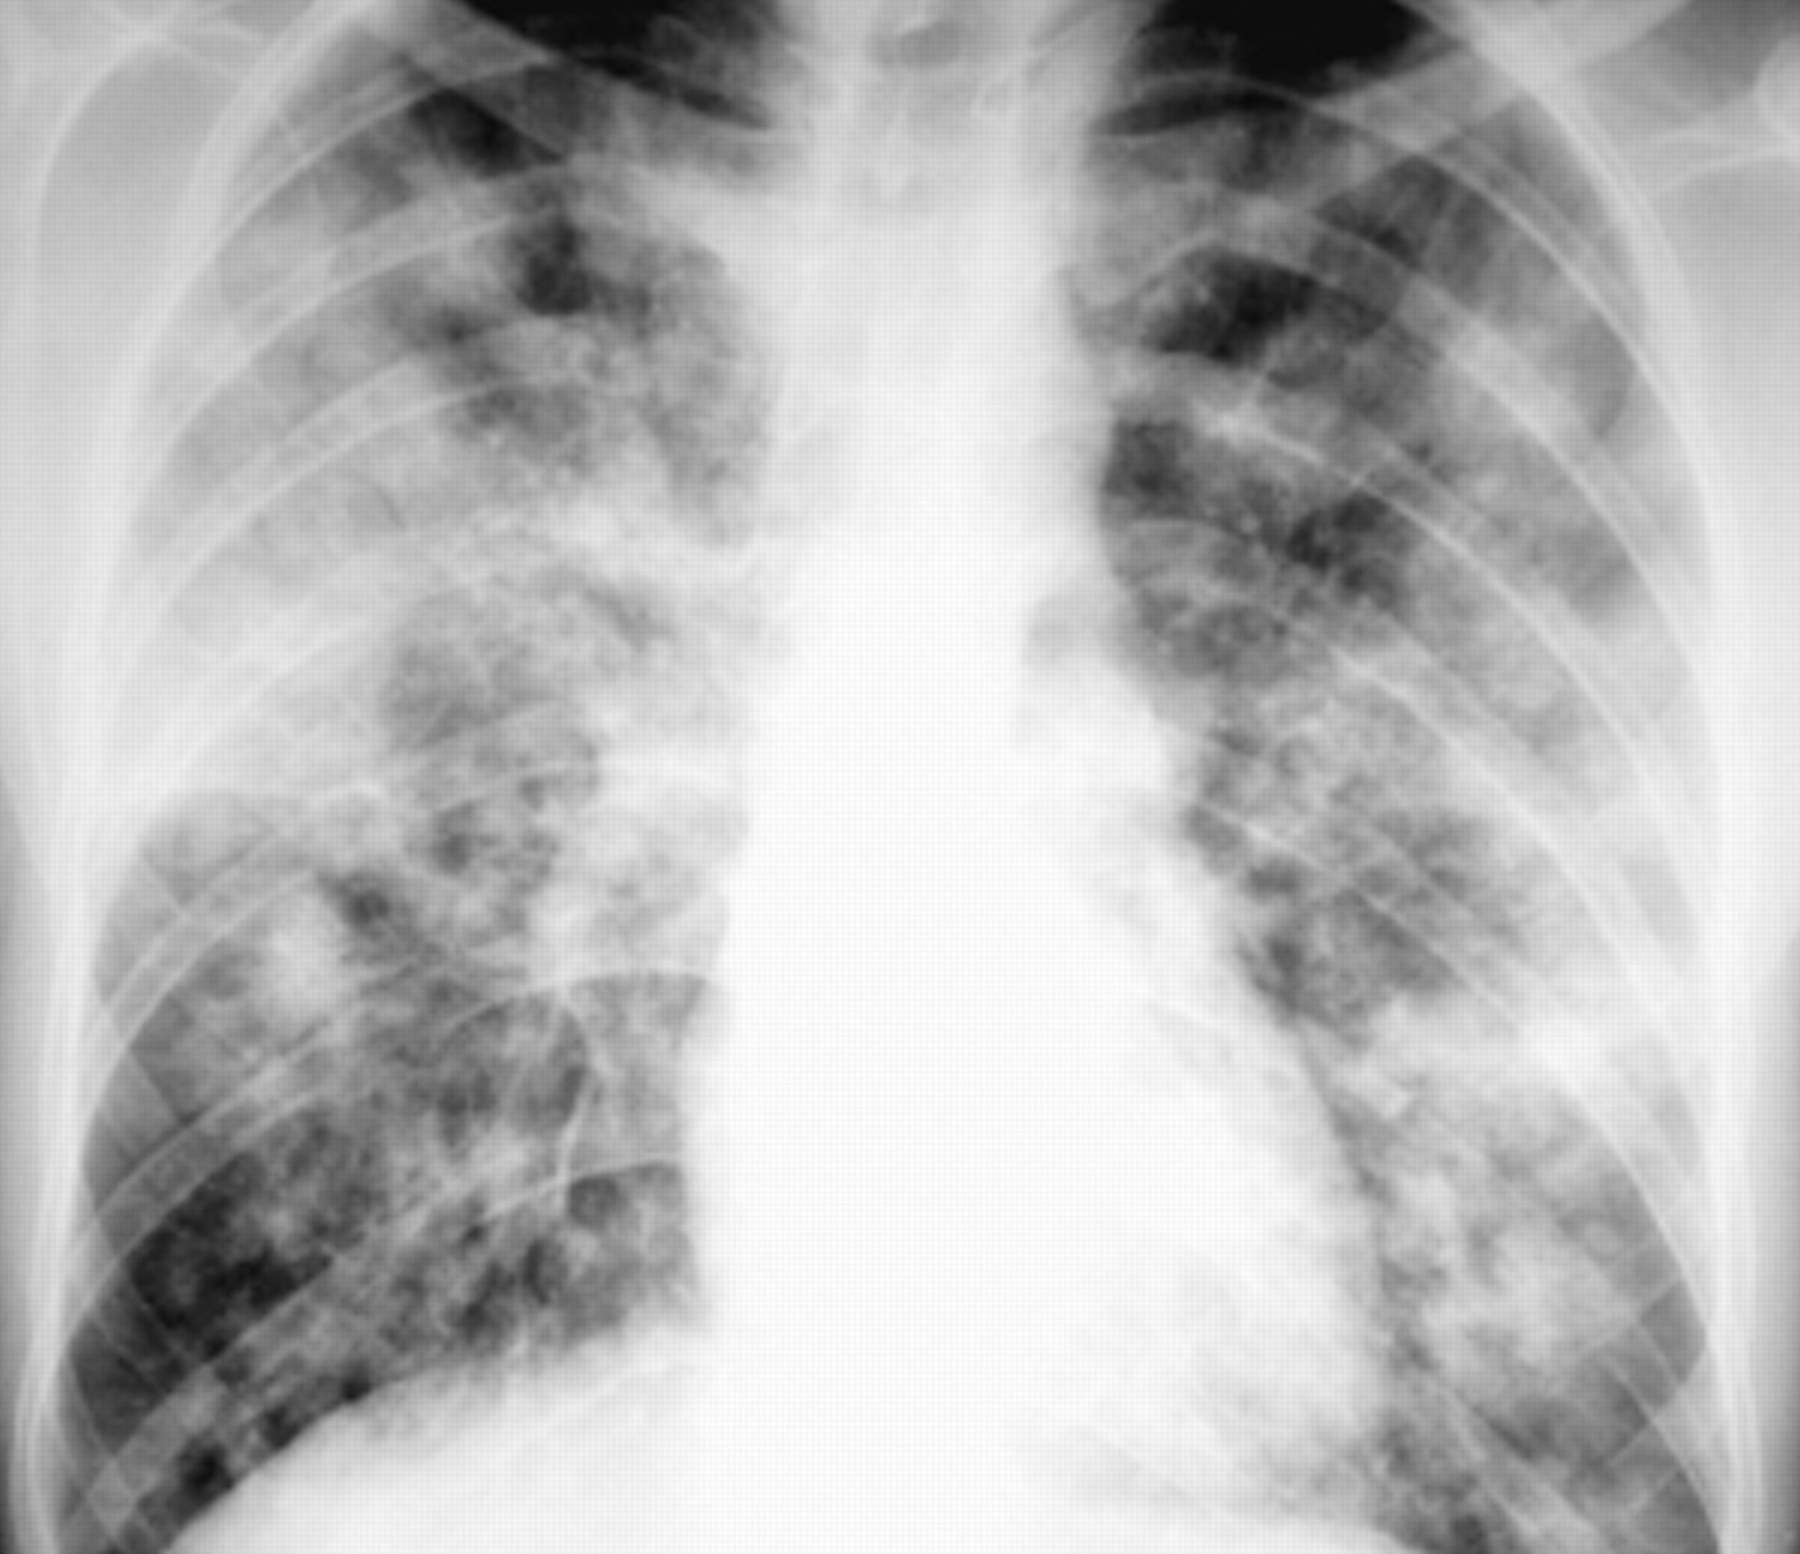 File:Bronchopneumonia caused by aspergillus.jpg